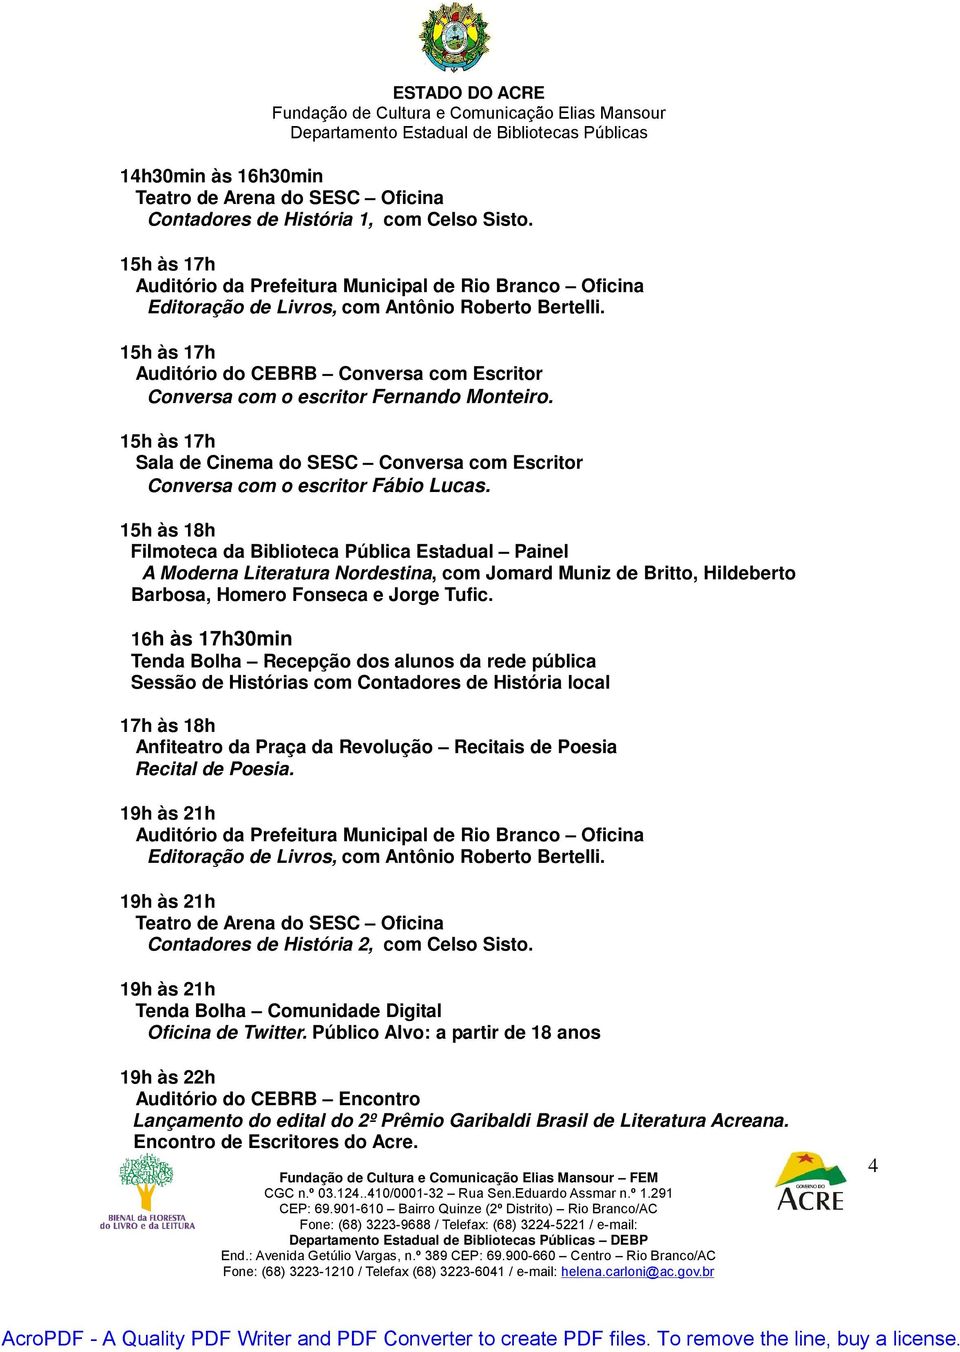 15h às 18h Filmoteca da Biblioteca Pública Estadual Painel A Moderna Literatura Nordestina, com Jomard Muniz de Britto, Hildeberto Barbosa, Homero Fonseca e Jorge Tufic.